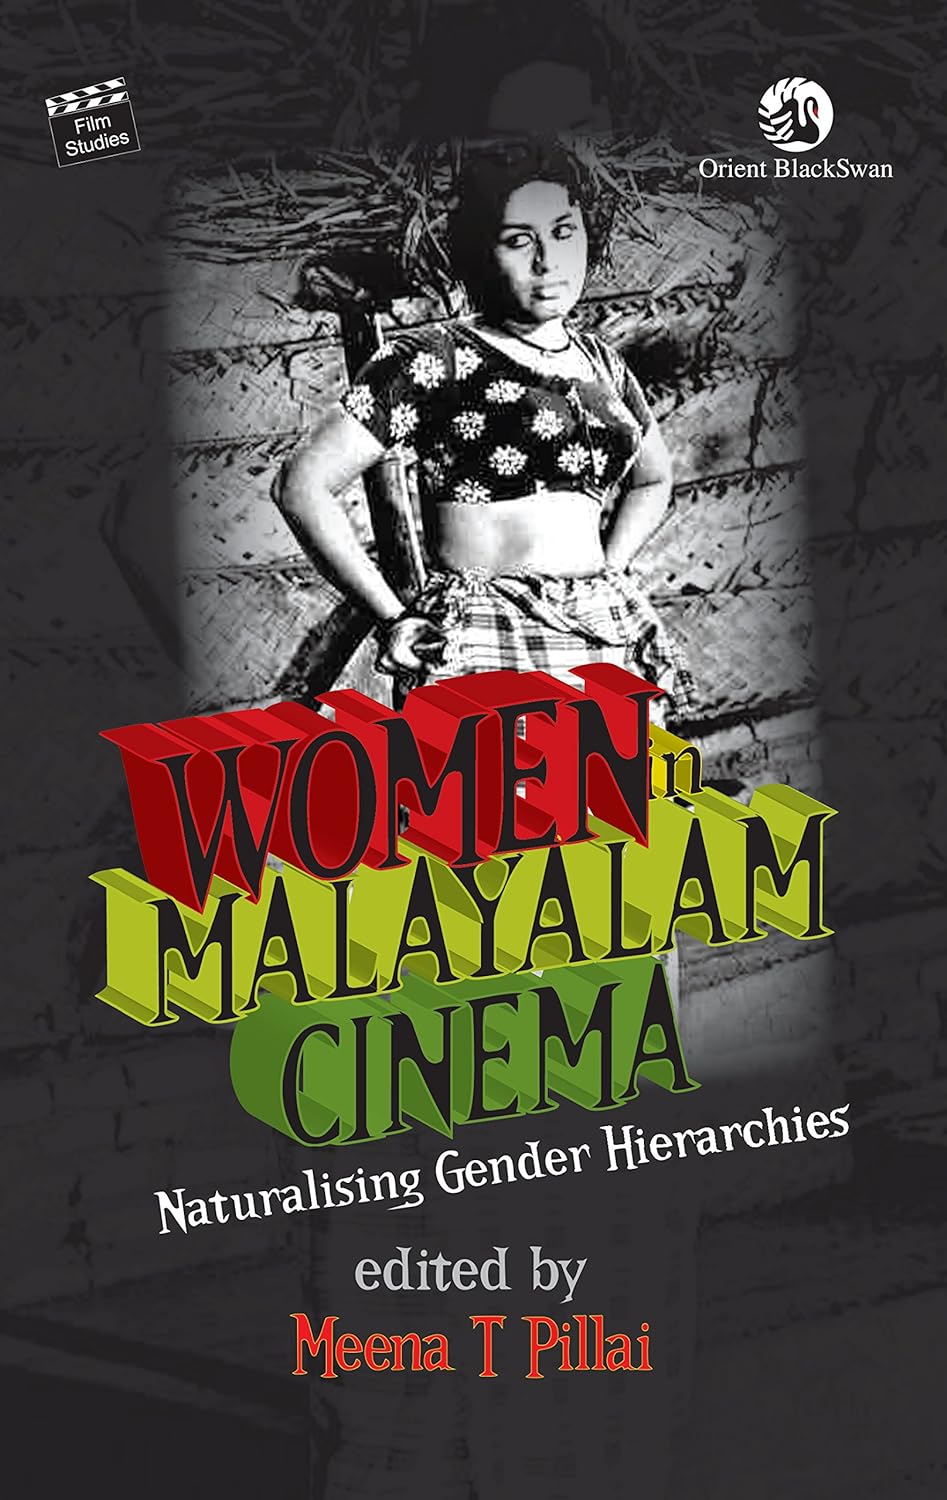 Women in Malayalam Cinema